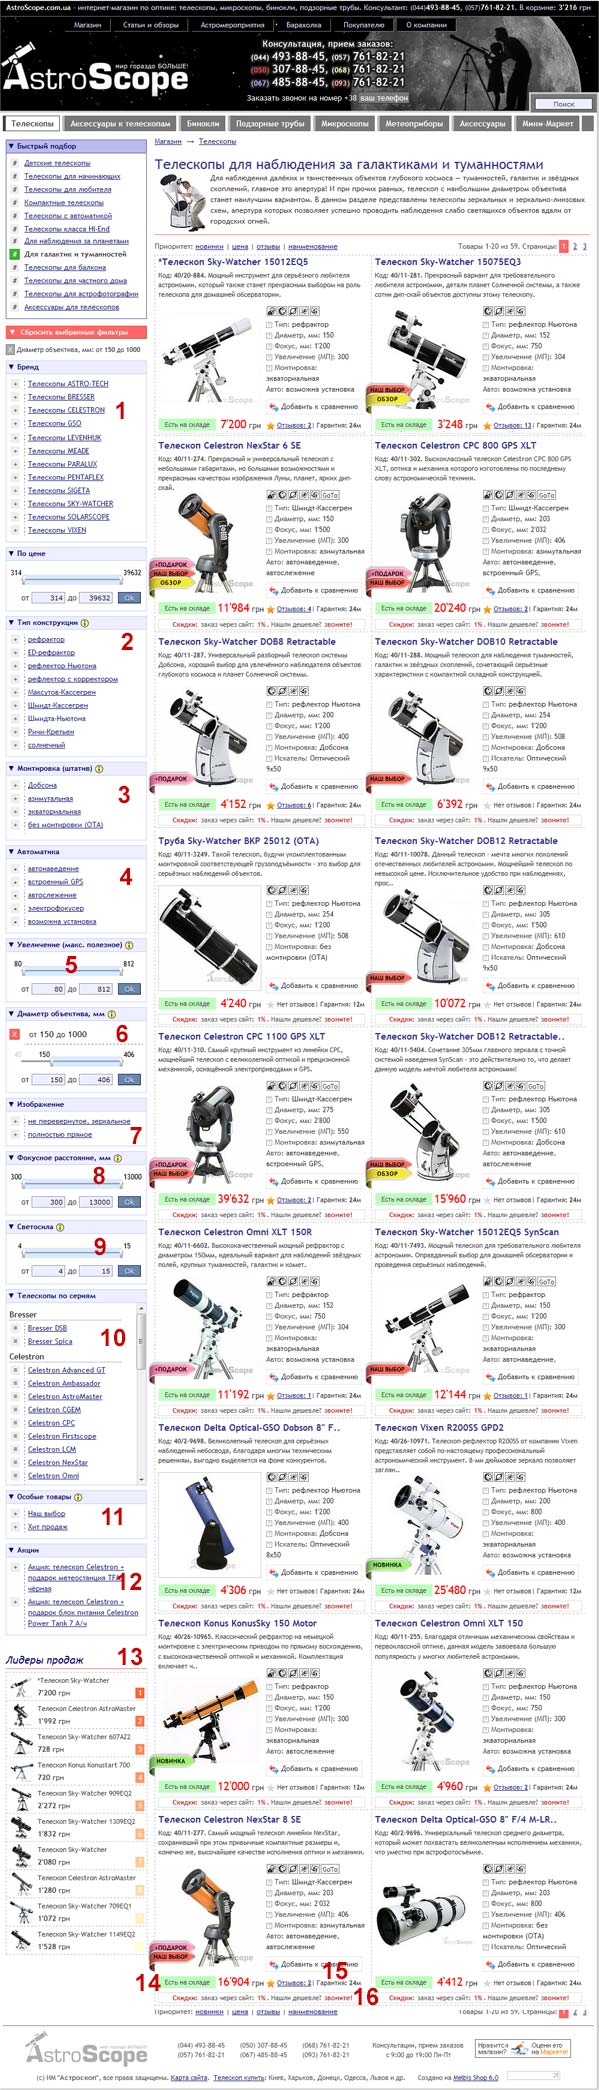 Оценка юзабилити интернет-магазина AstroScope - 3